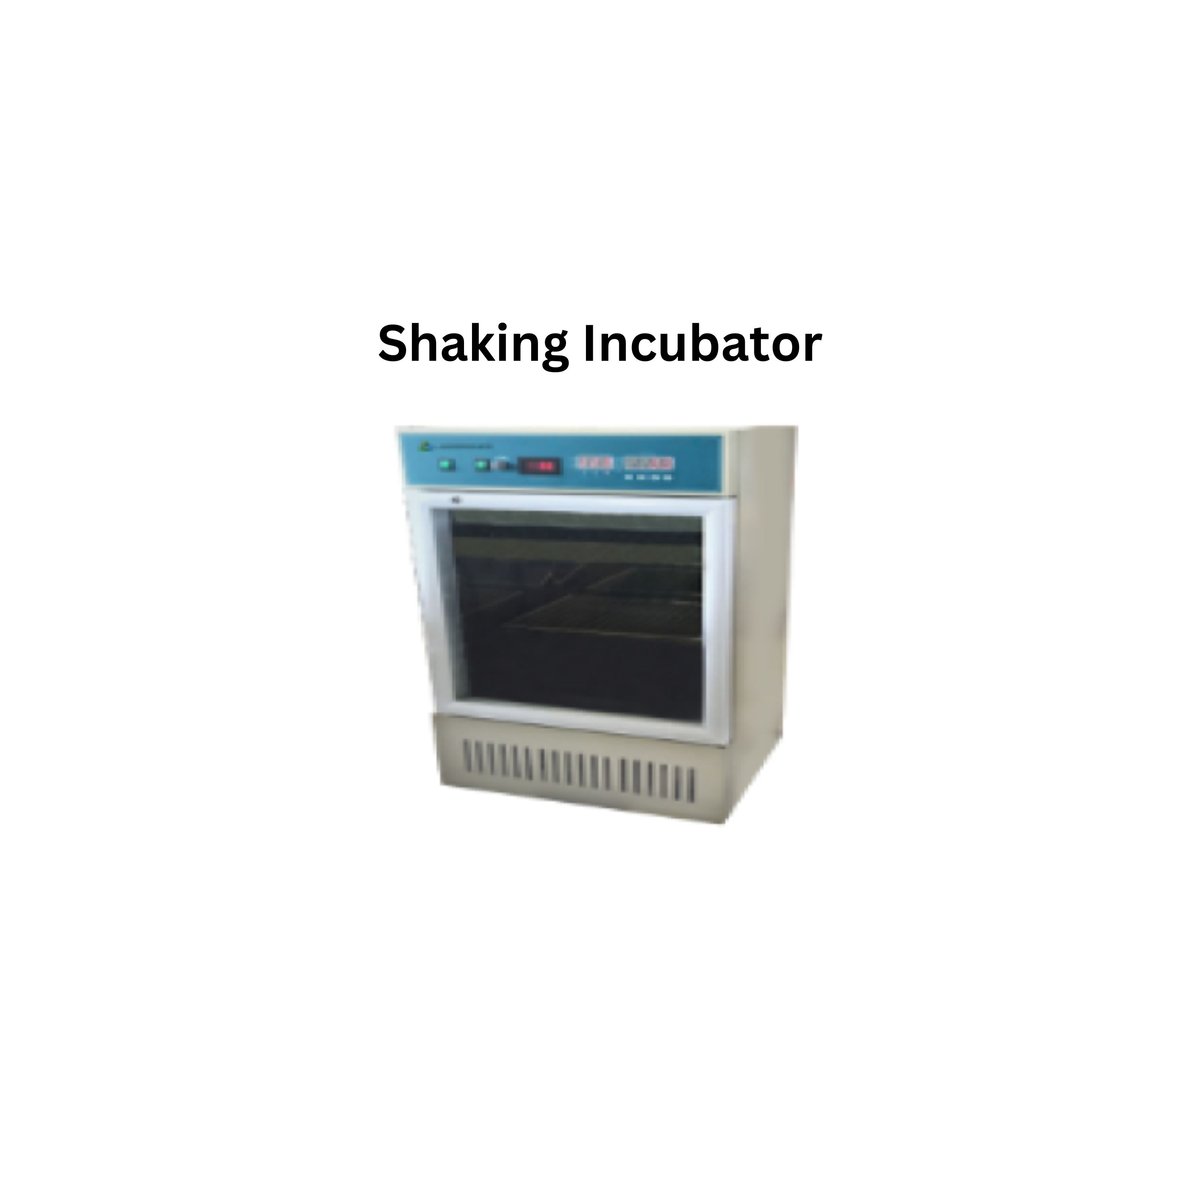 Shaking Incubator.jpg